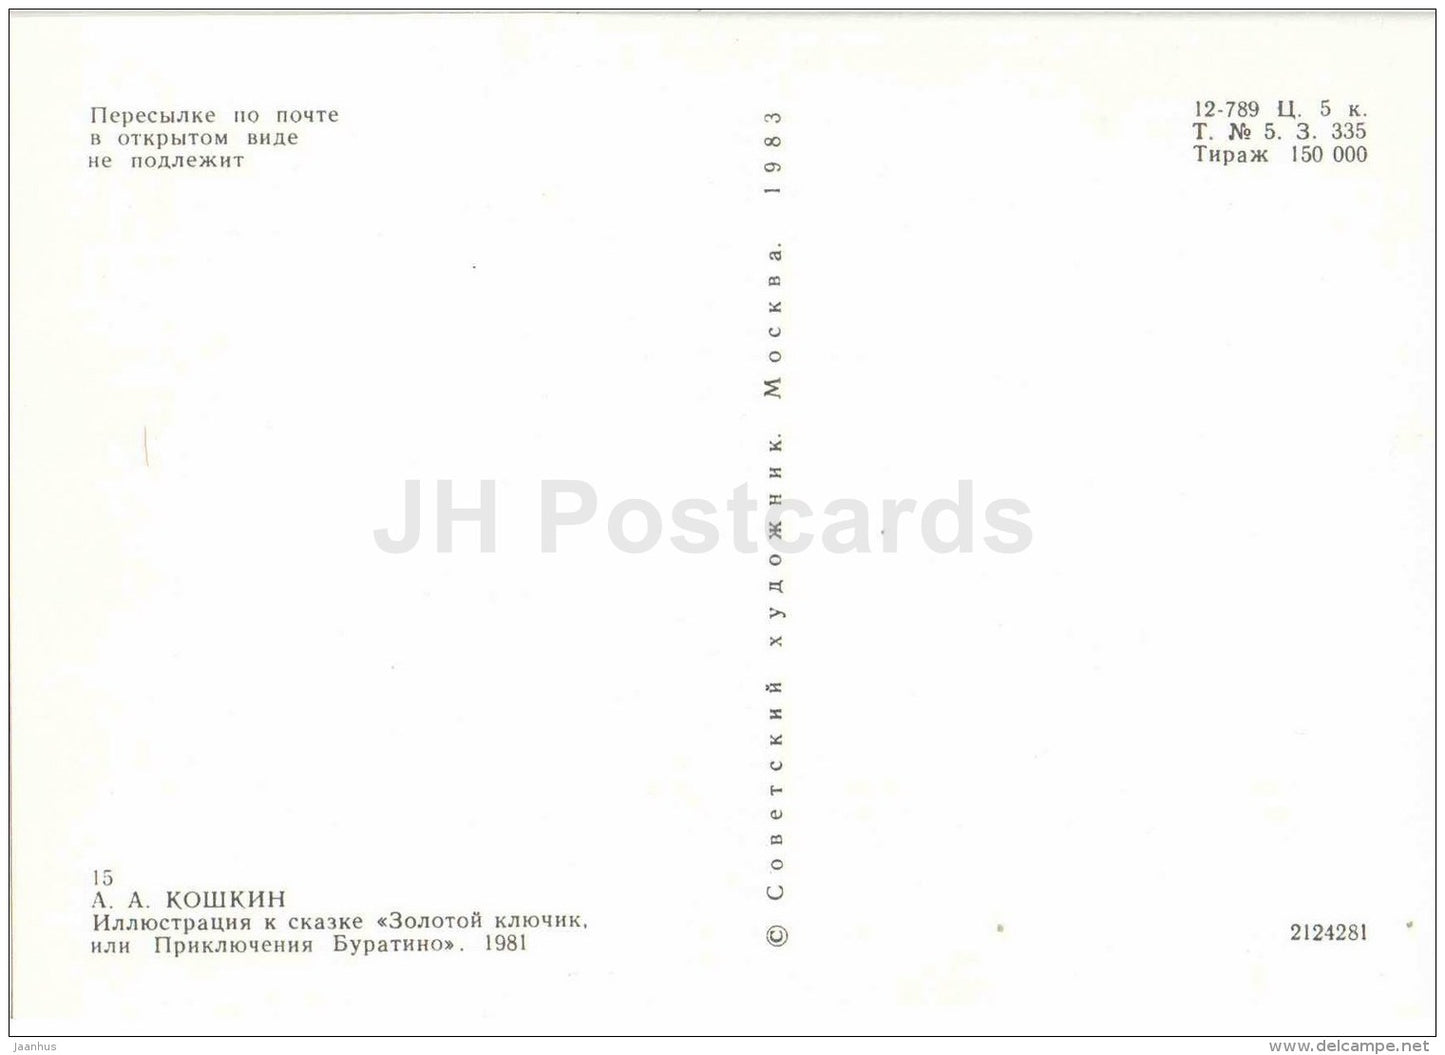 Buratino - bat - Golden Key - Pinocchio and Buratino - 1983 - Russia USSR - unused - JH Postcards